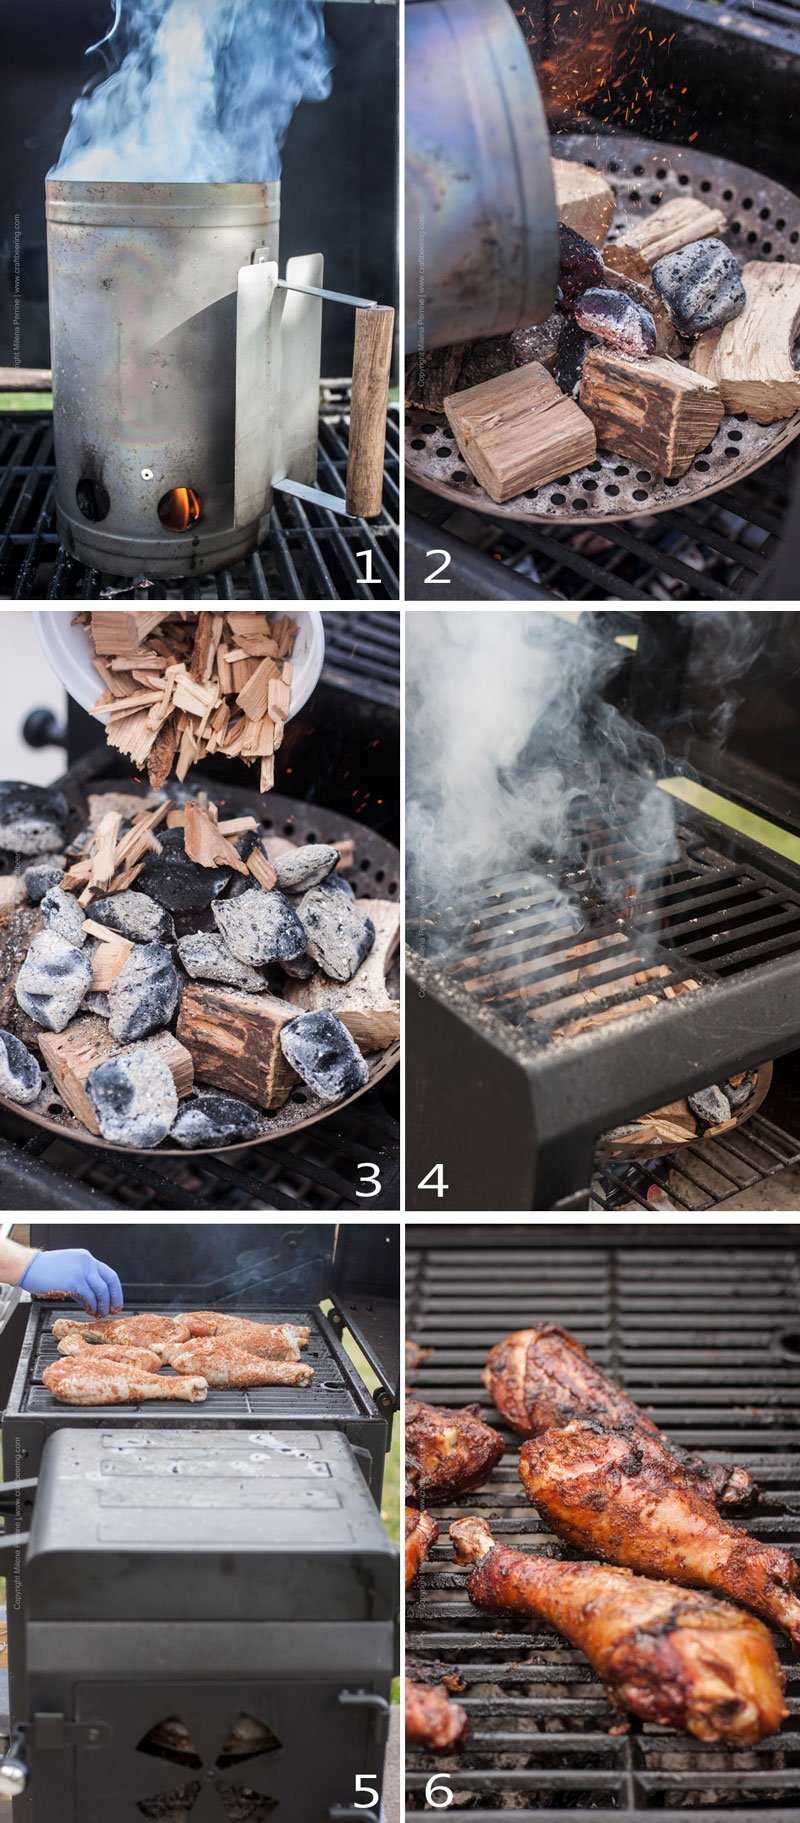 Steps to prepare a smoker for turkey legs and smoke them fair style.